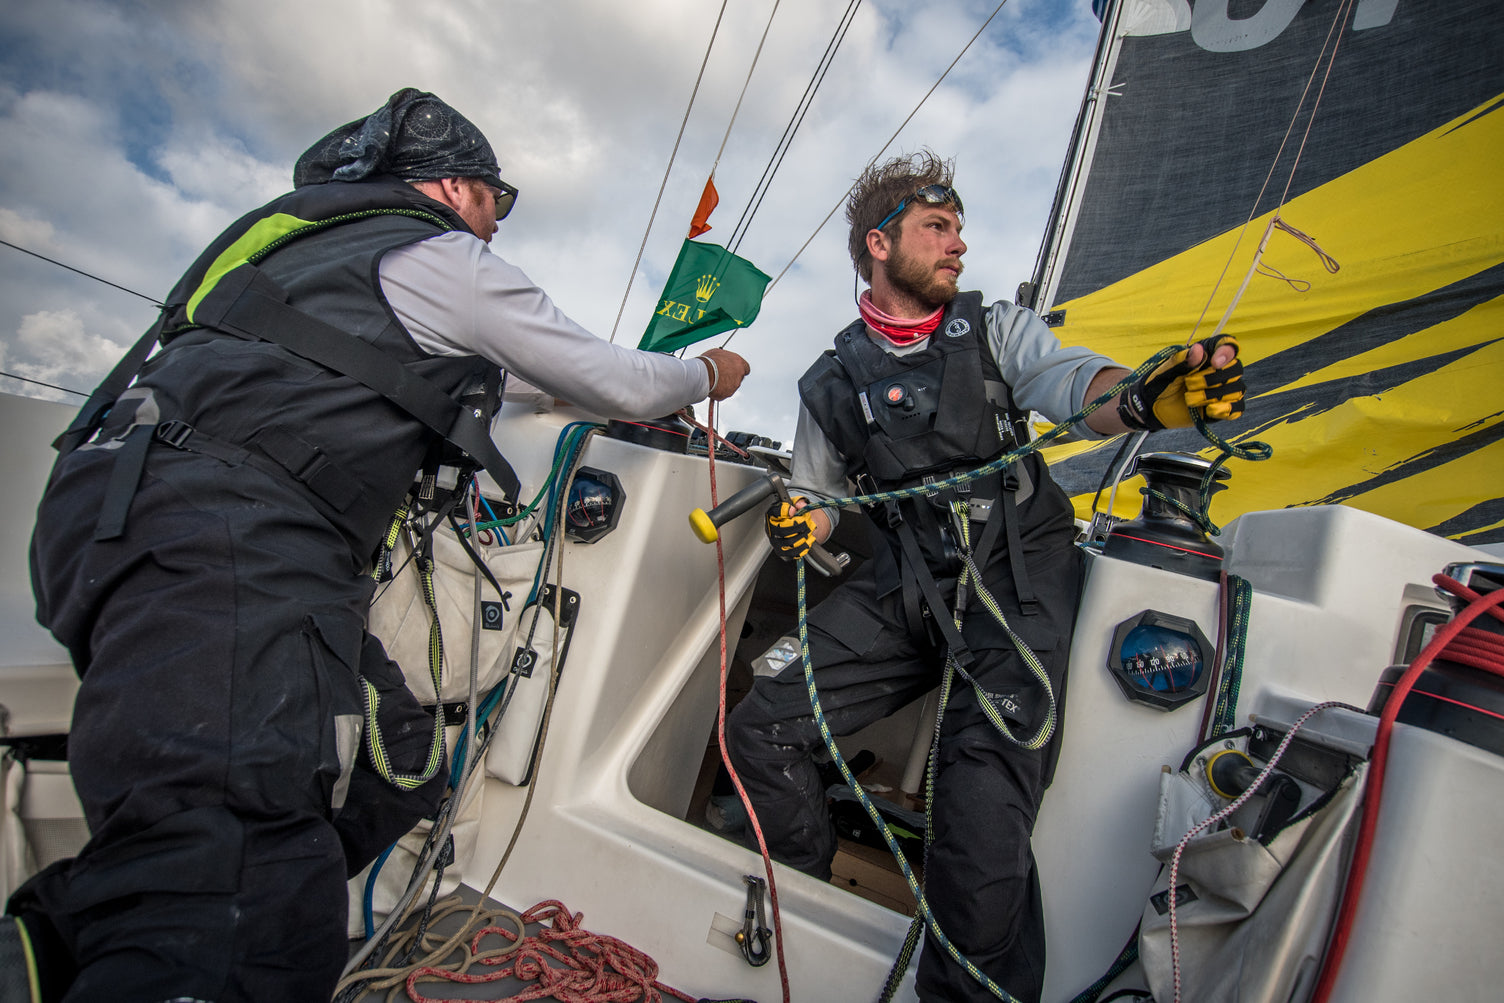 2 men adjusting sails and changing course